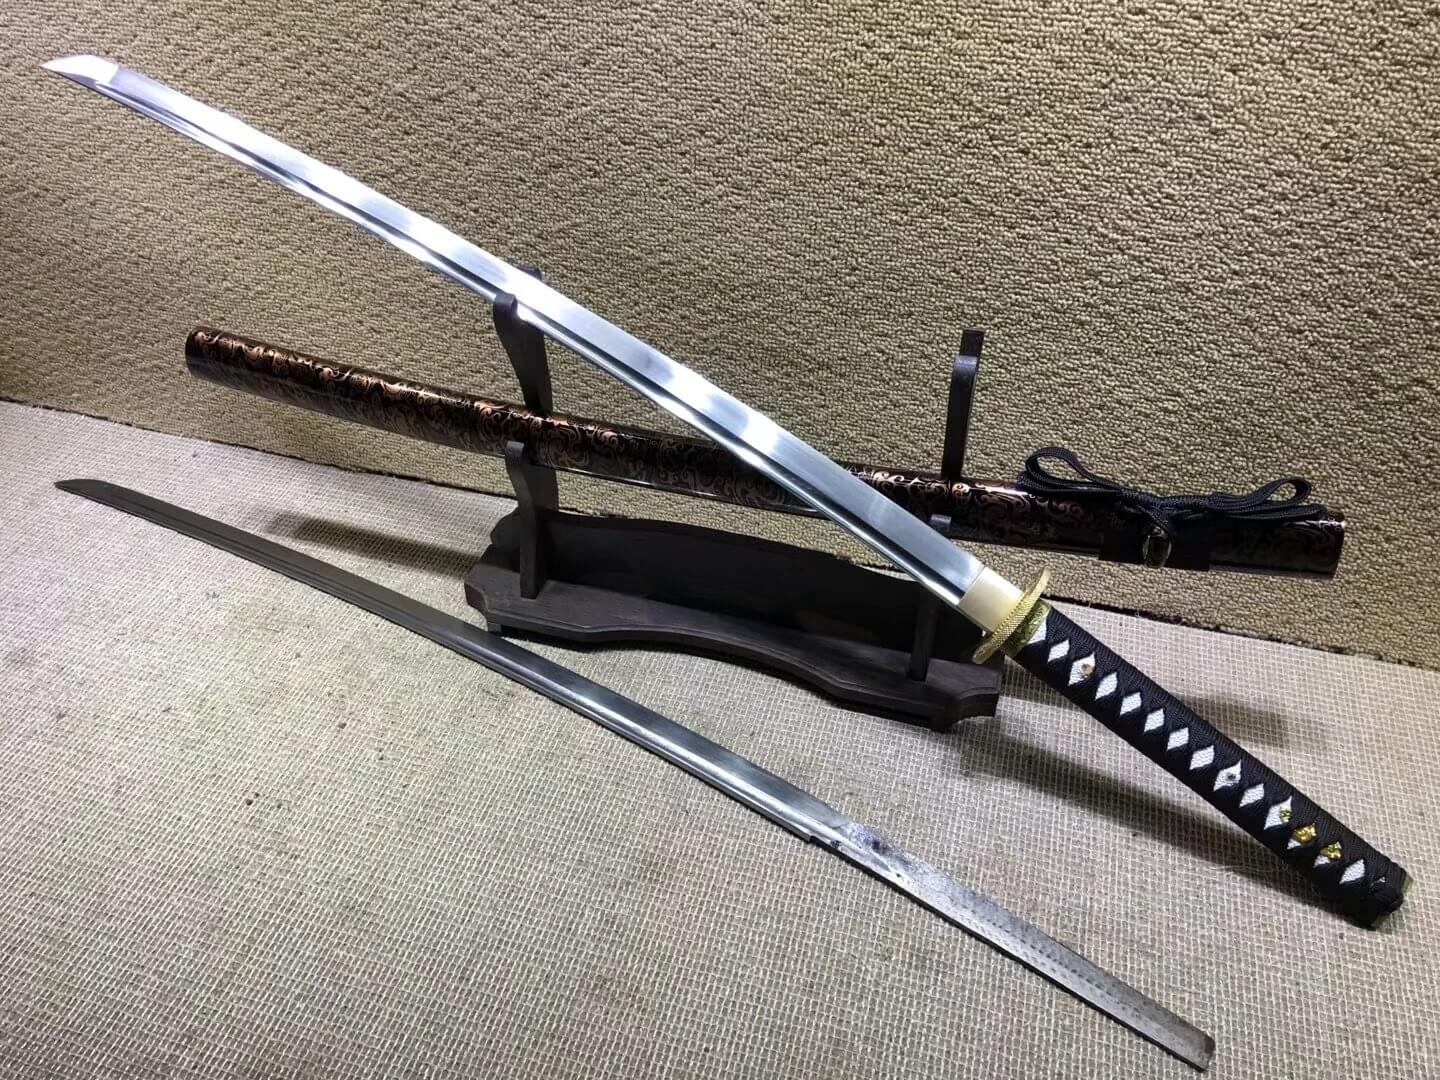 Samurai katana,High carbon steel bade,Brass fitteds,Length 39" - Chinese sword shop